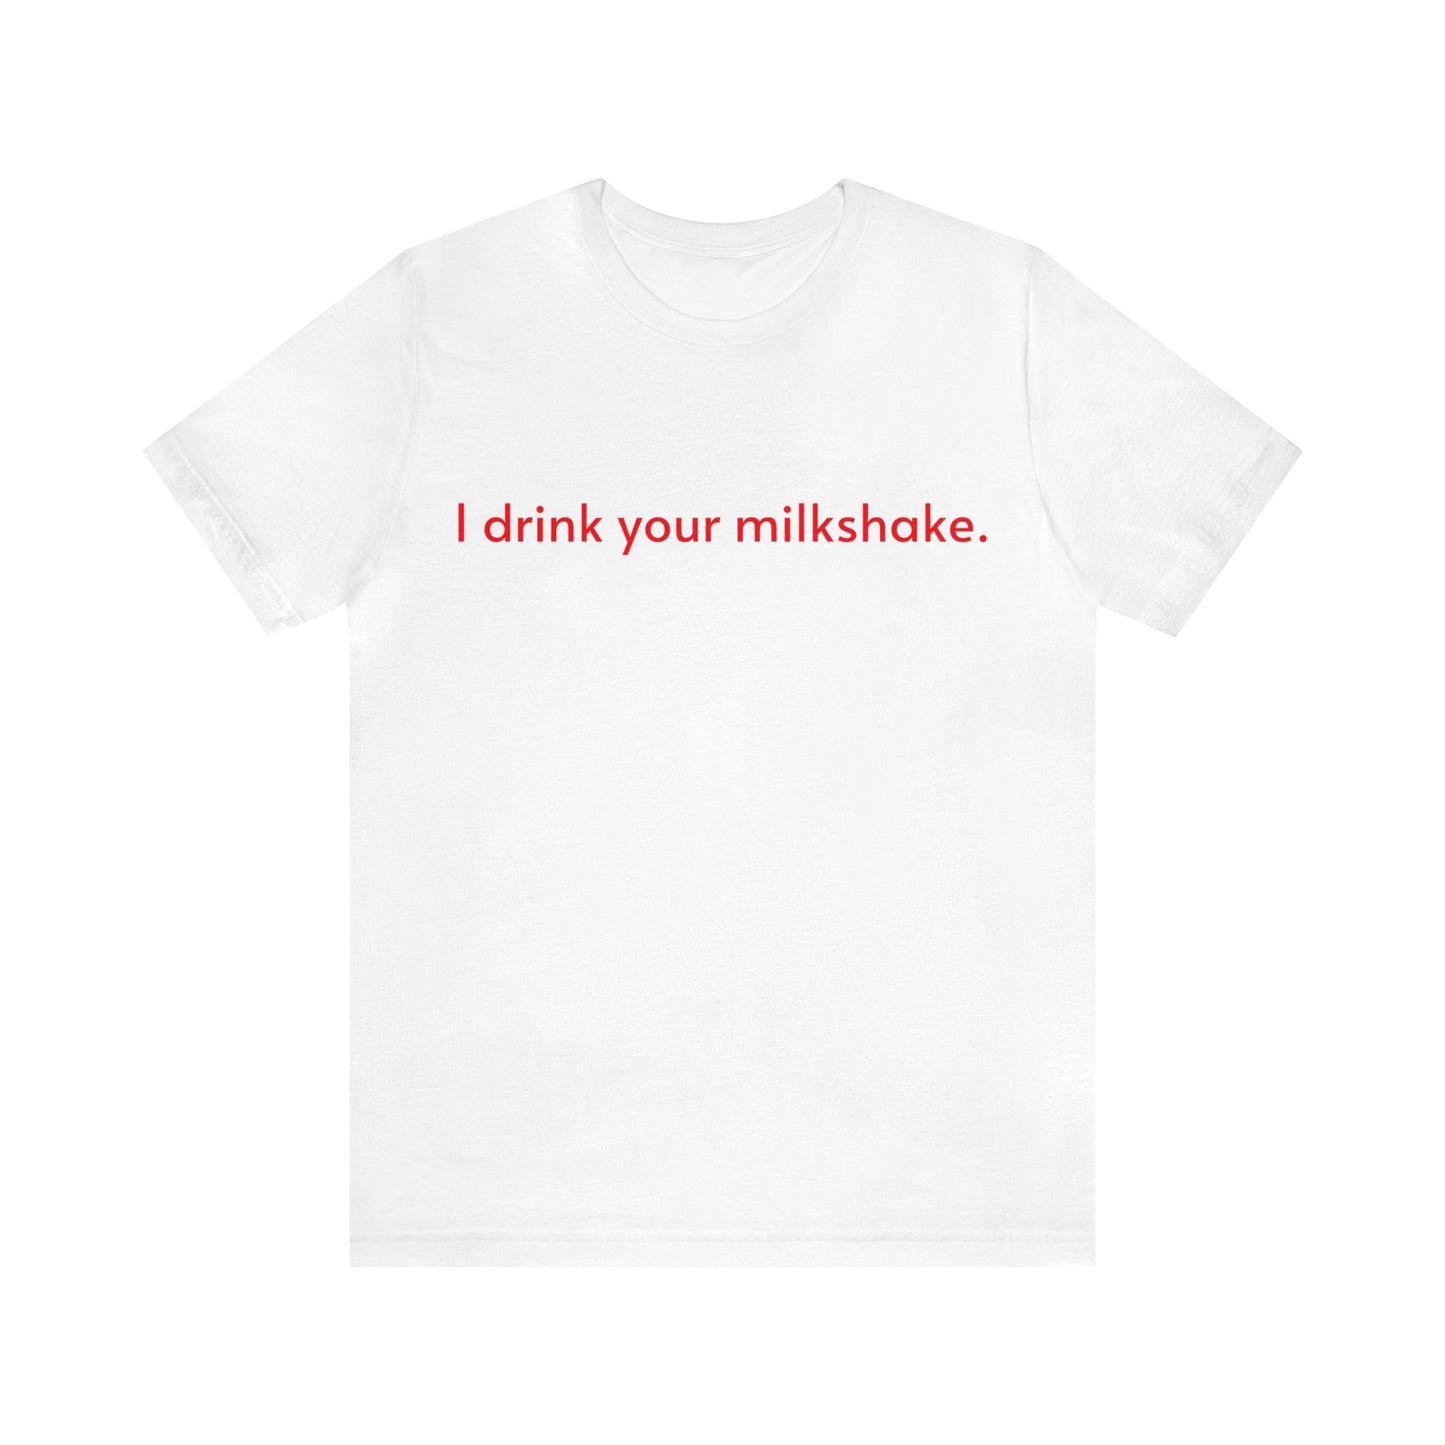 I drink your milkshake